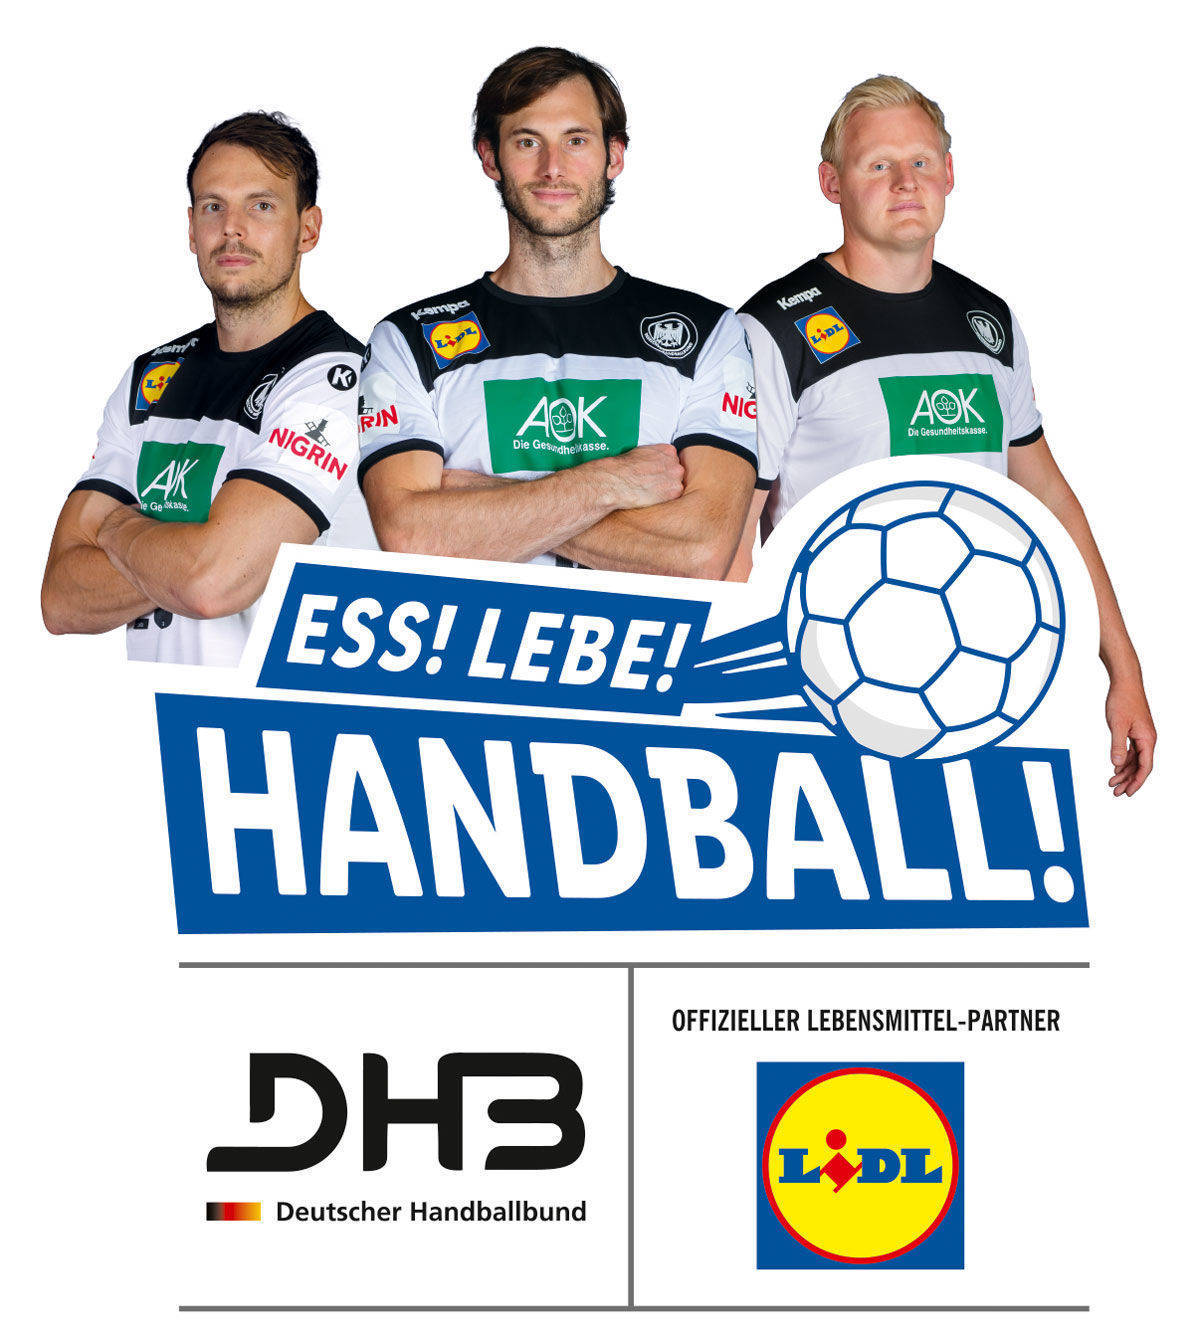 Millionenpublikum auch für Handball-Sponsor Lidl.